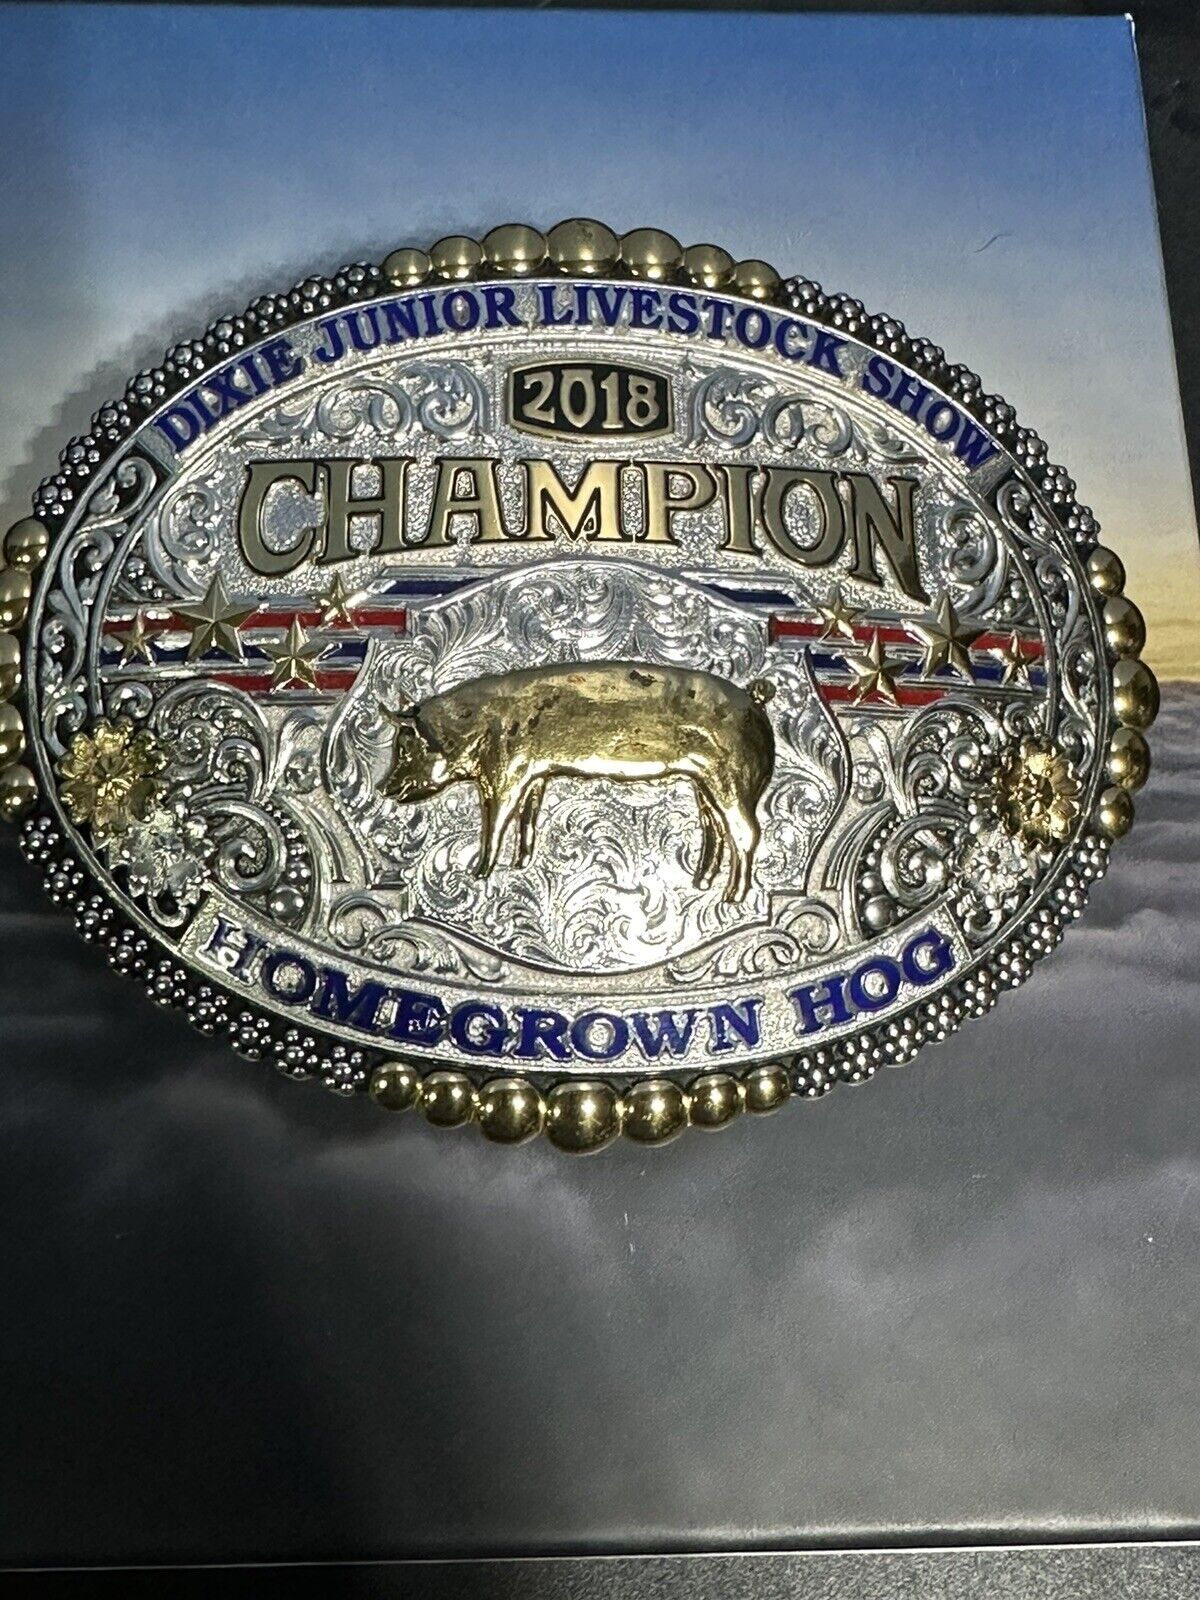 2019 Jr Dixie Livestock Dixie Homegrown Hog  Champion Belt Buckle by Gist Stars